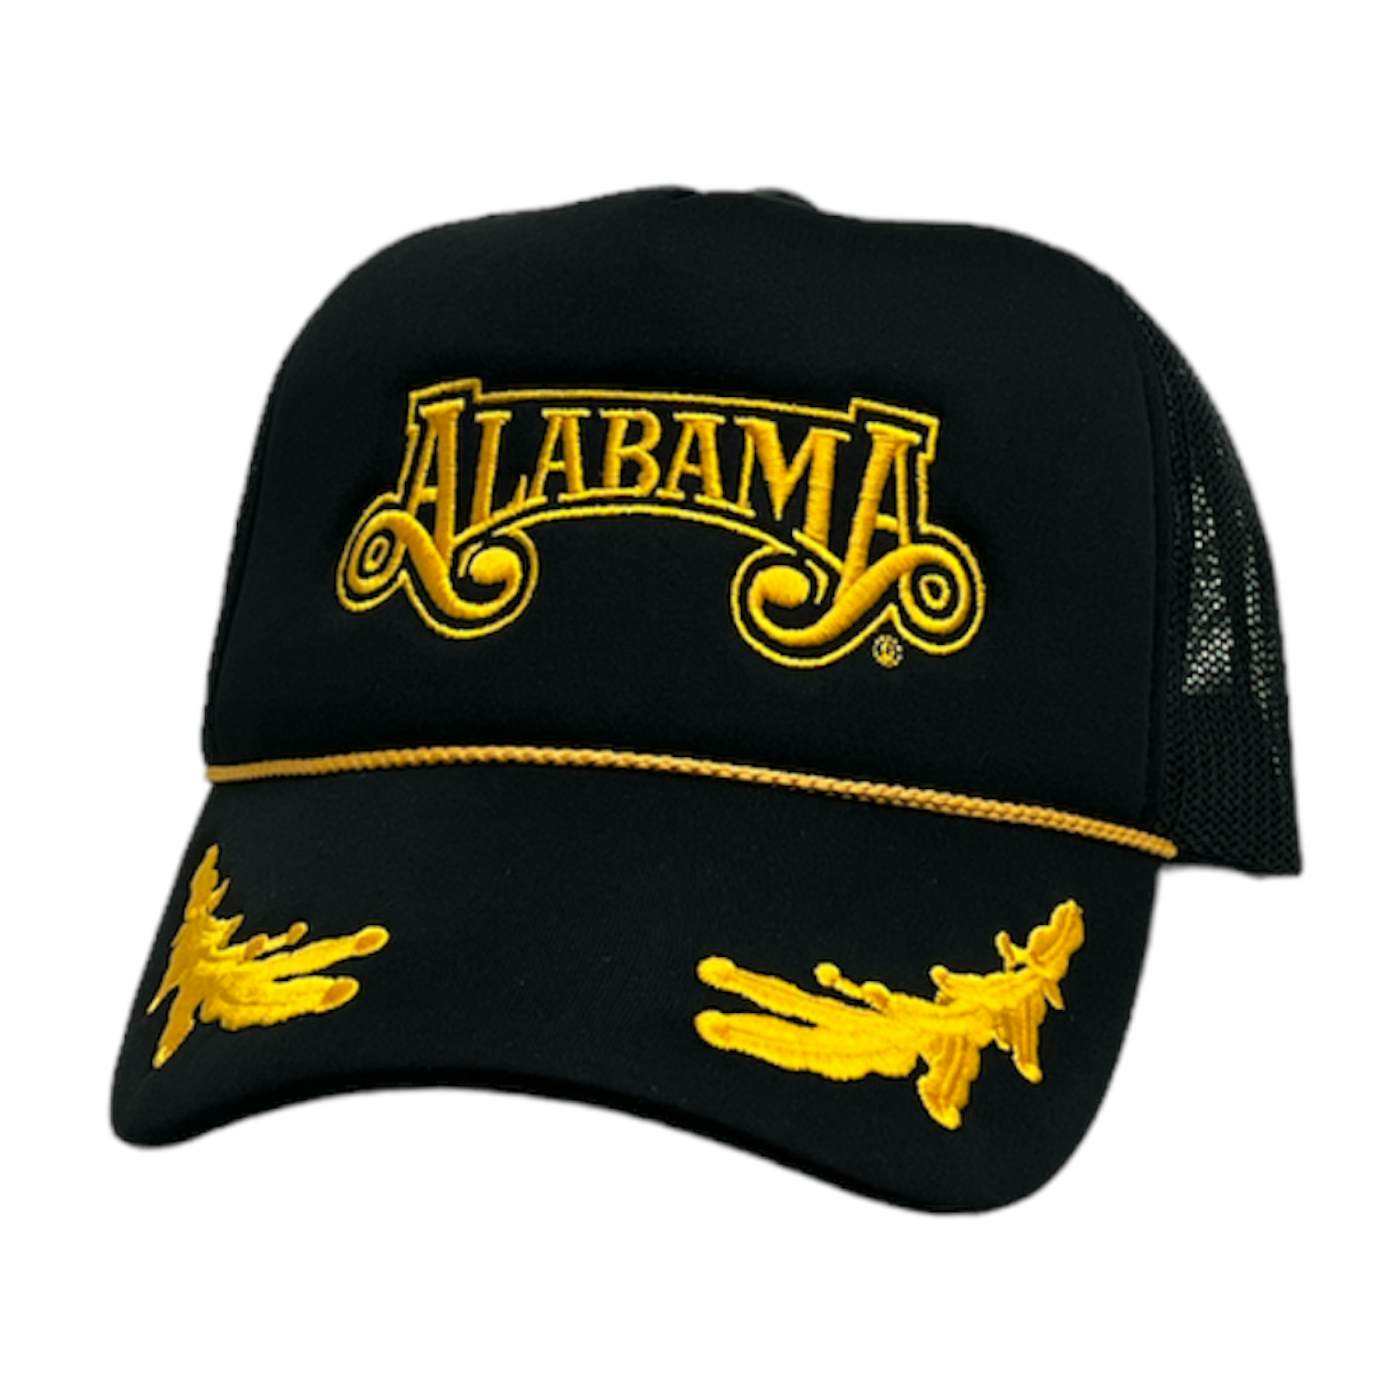 Alabama Black Captain's Hat